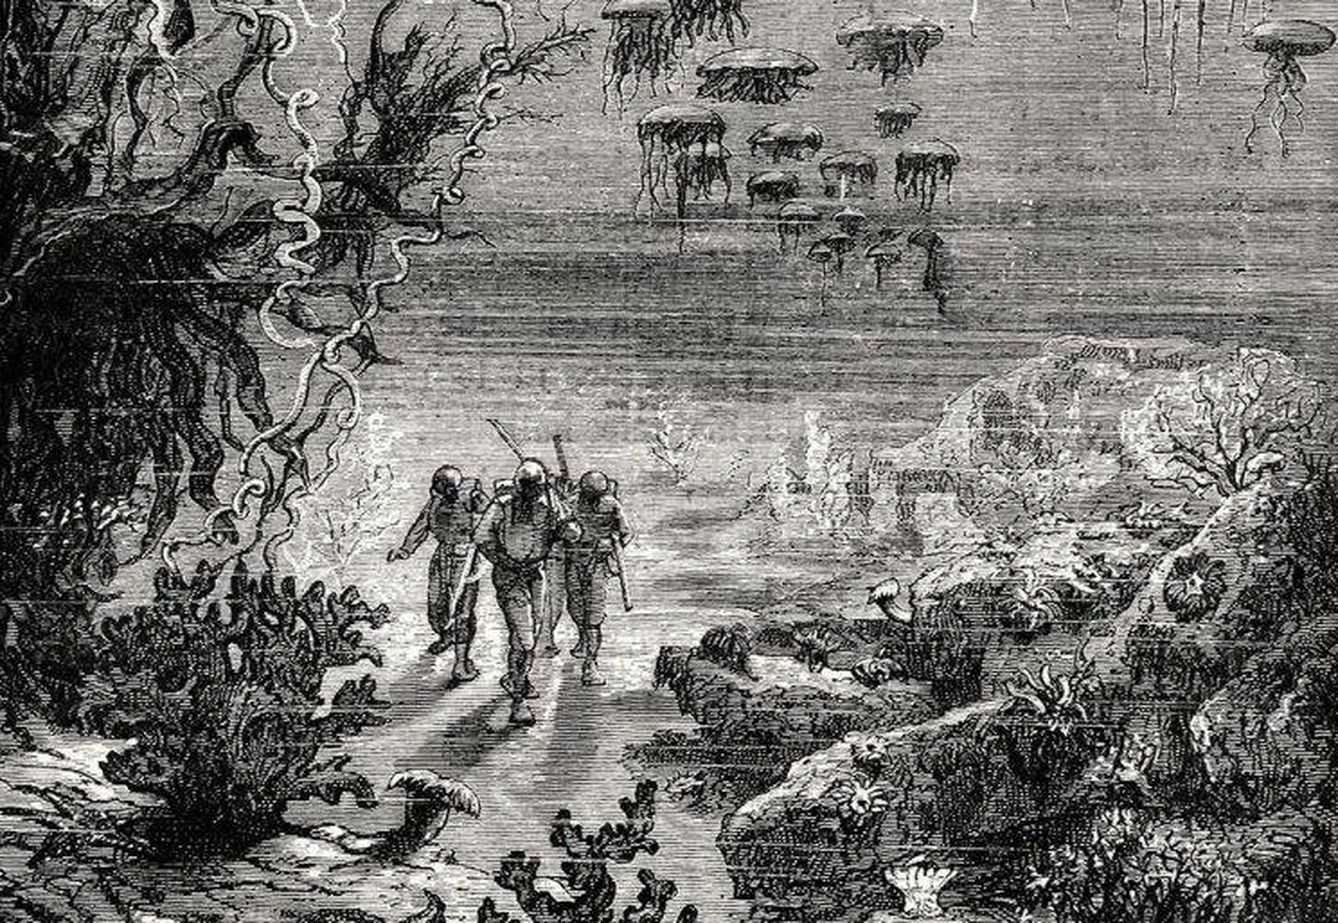 Cacería submarina en la isla de Crespo ilustrada por Neville en 1885.